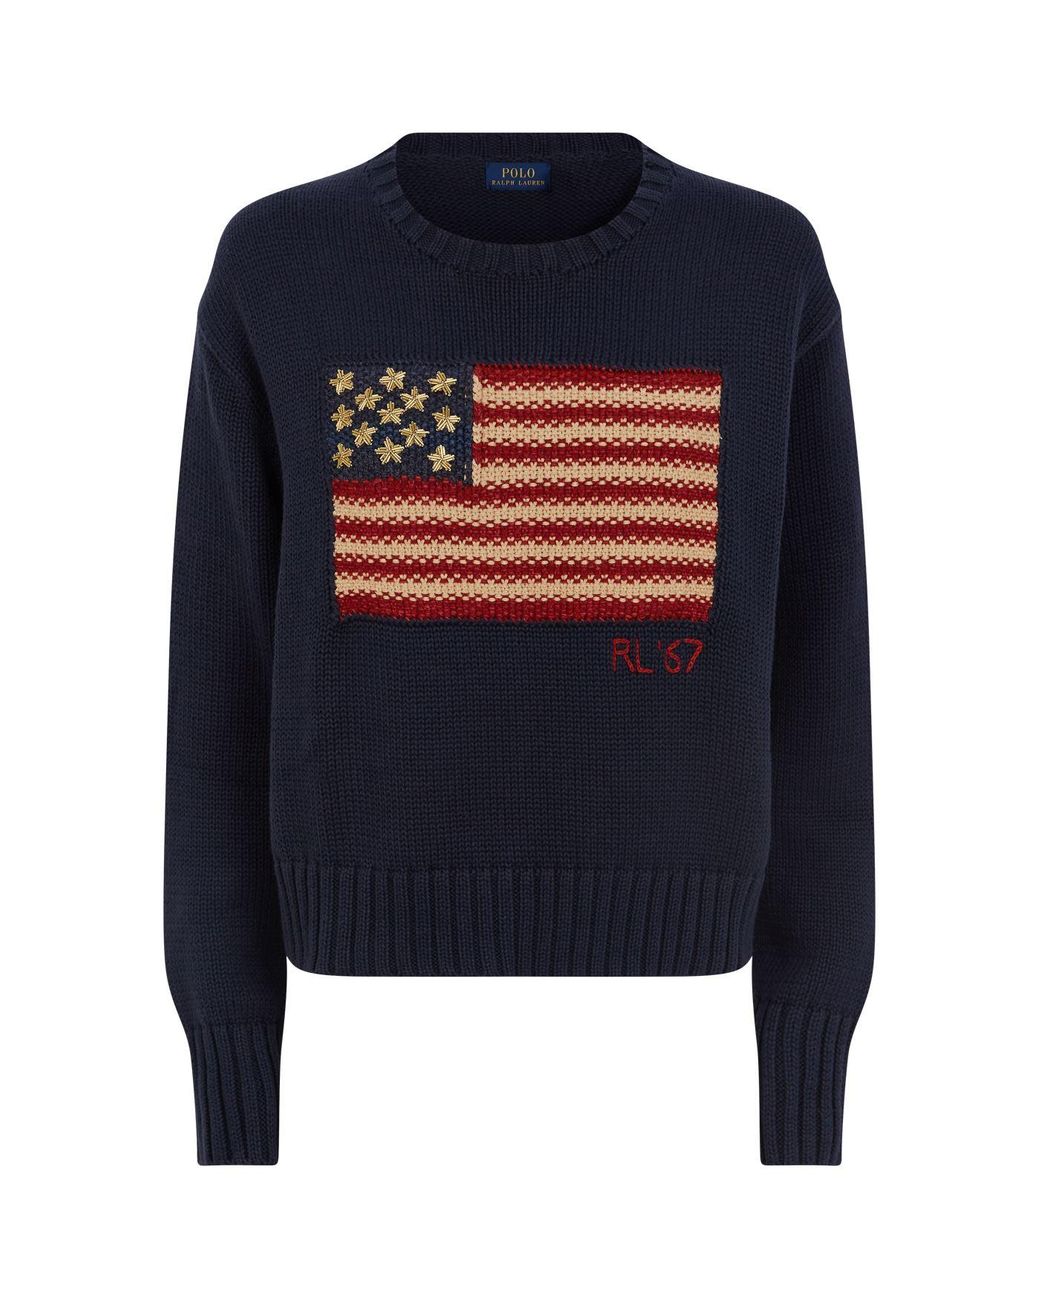 Lyst - Polo Ralph Lauren American Flag Sweater in Blue